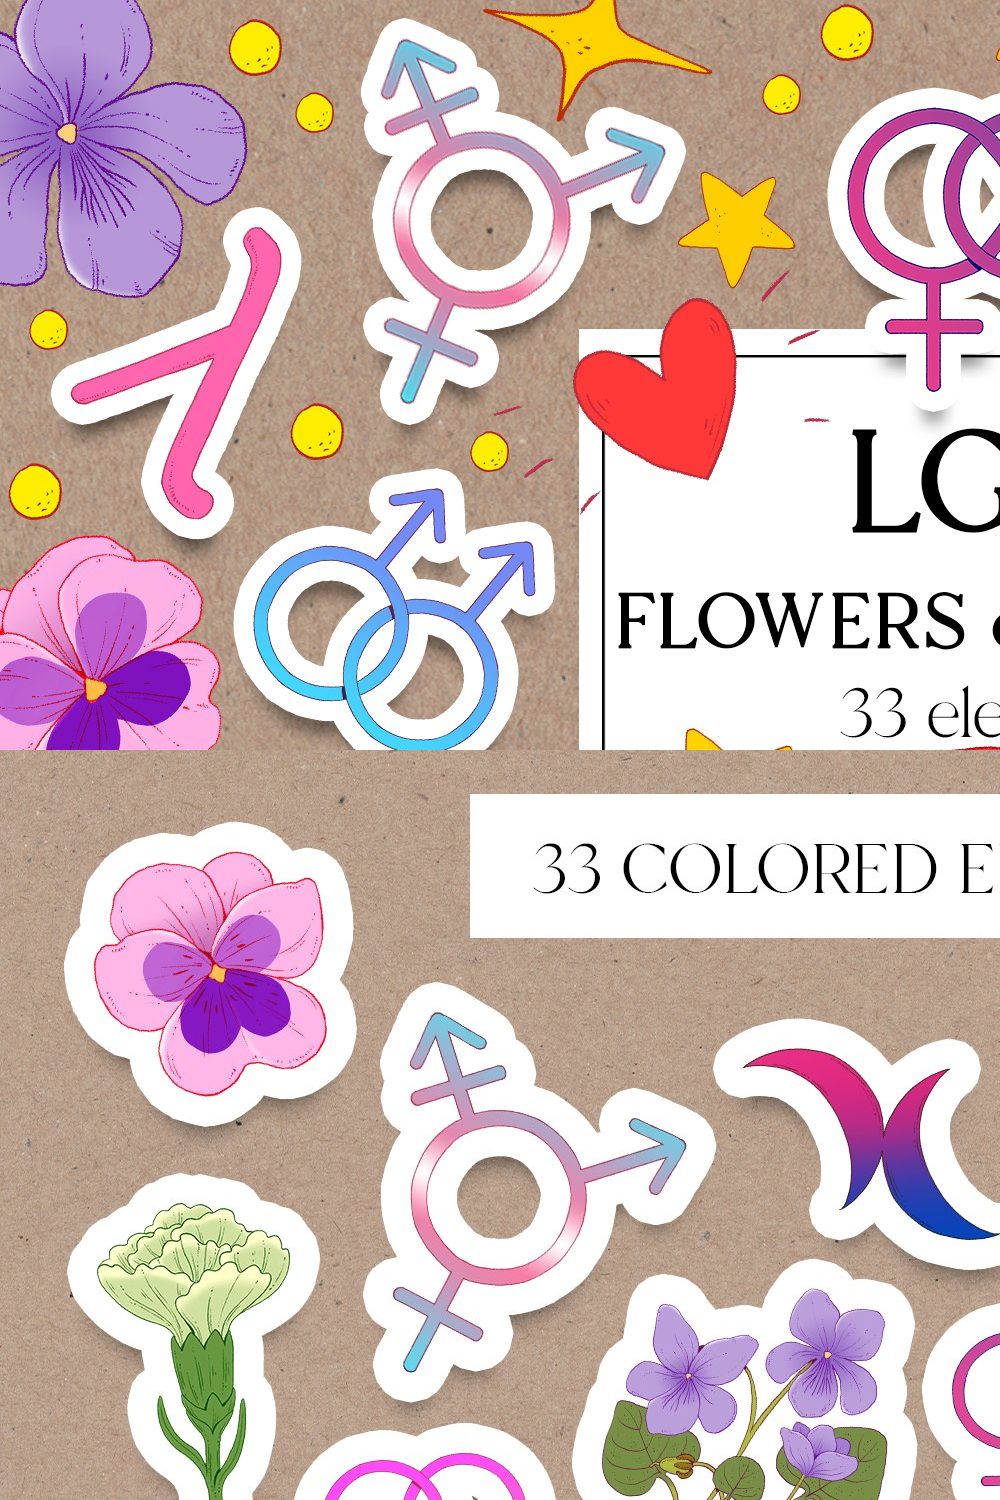 LGBT flowers & symbols. Pride Month pinterest preview image.